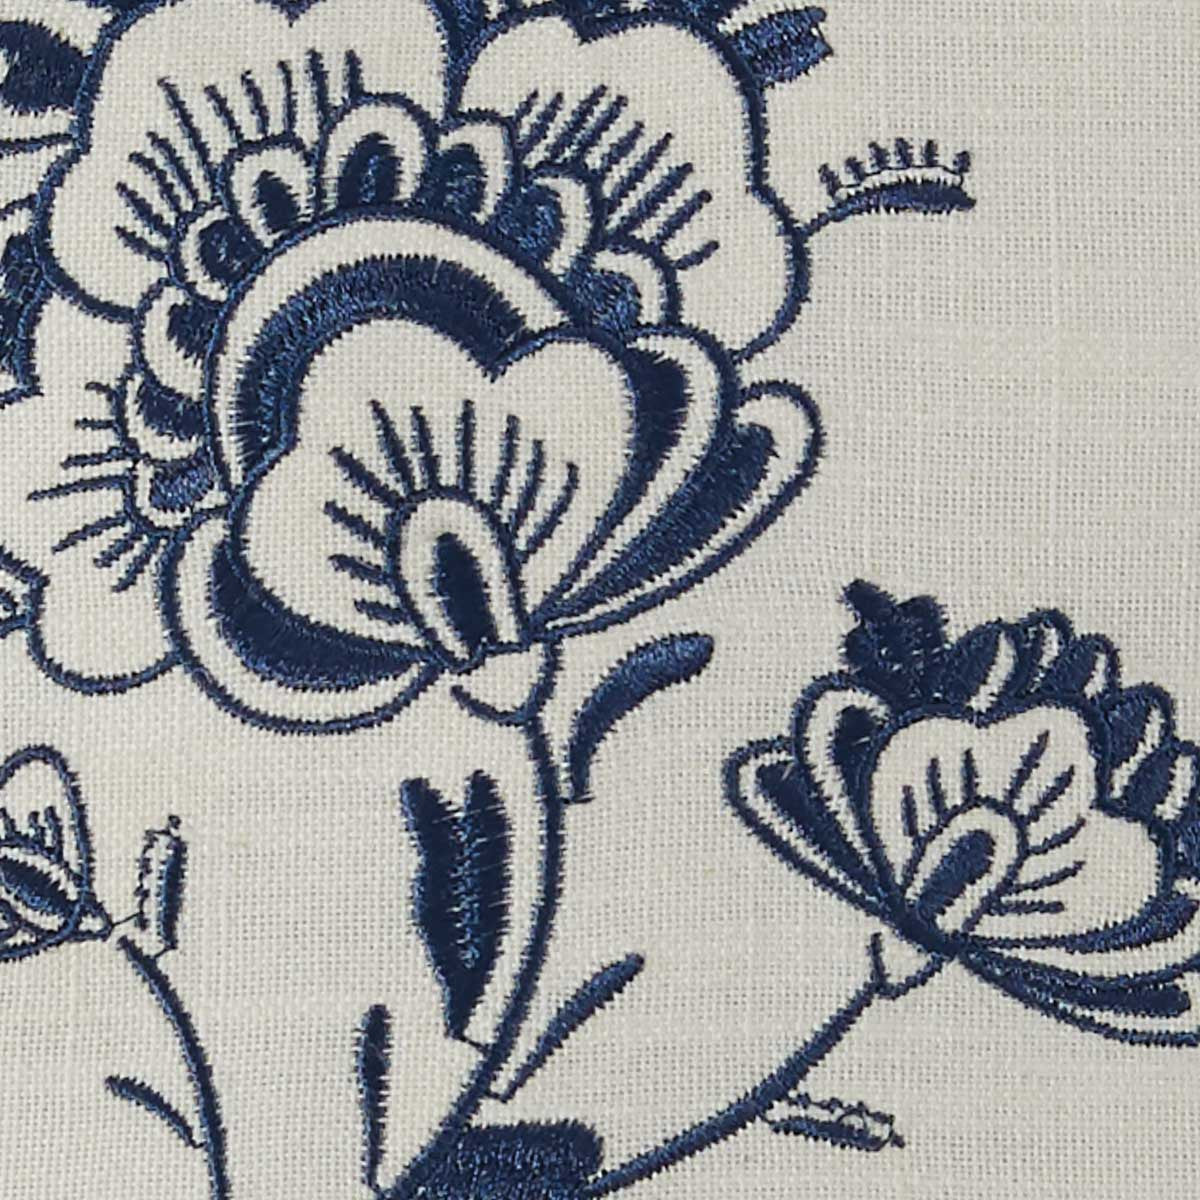 Williamsburg Delft Flower 10" Embroidered Pillow  Park Designs